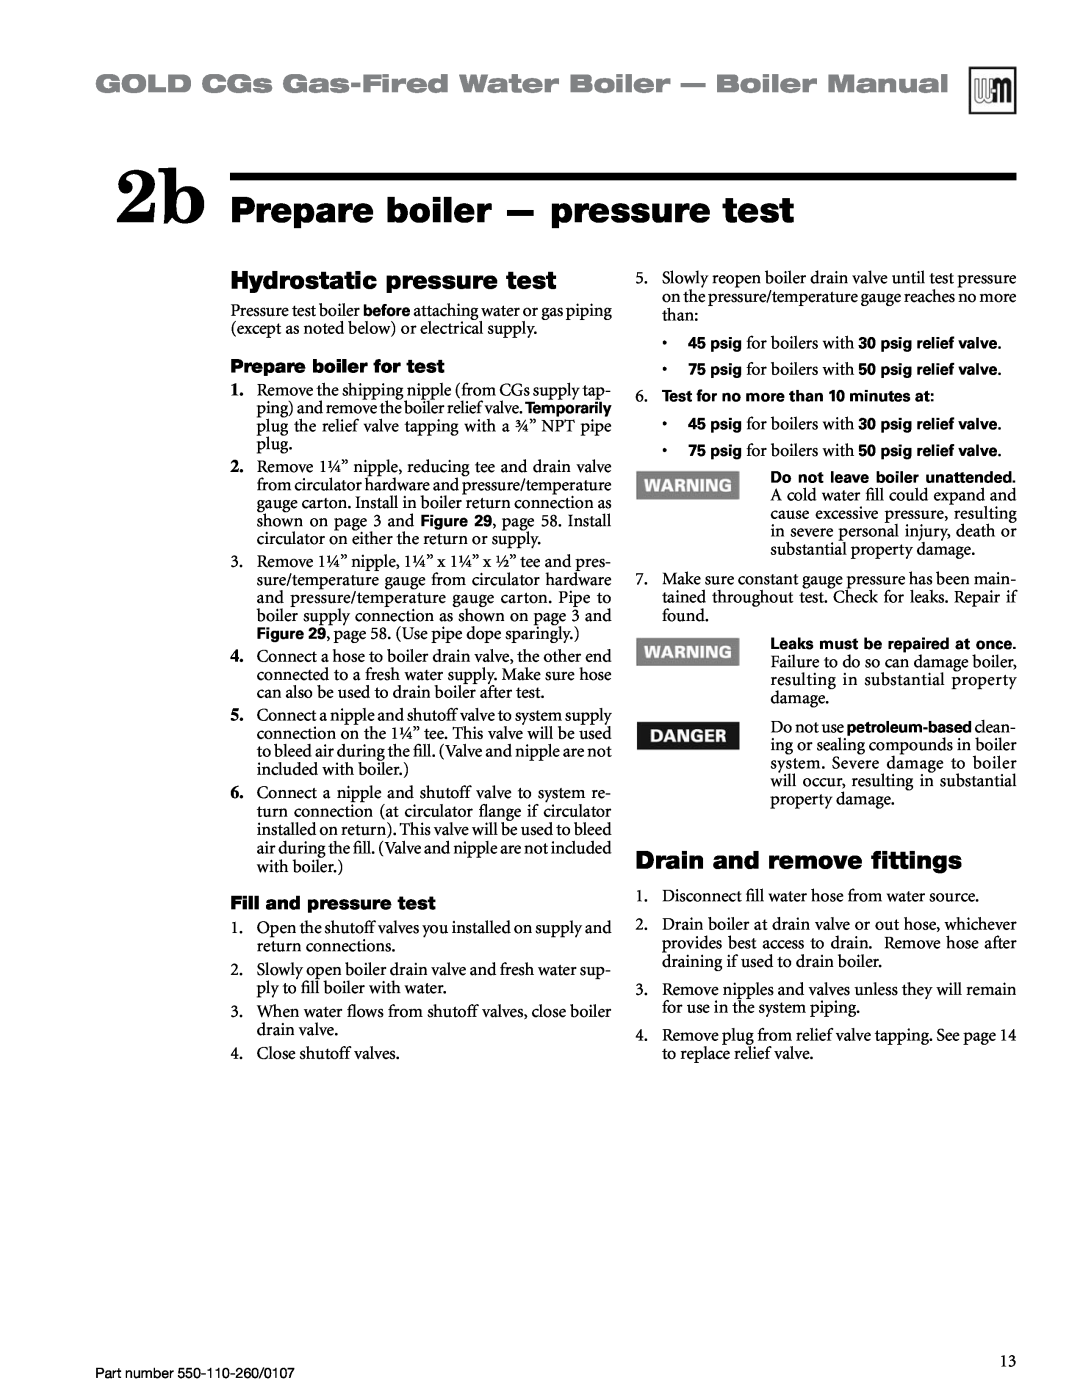 Weil-McLain 550-110-260/0107 manual 2b Prepare boiler - pressure test, Hydrostatic pressure test, Drain and remove fittings 